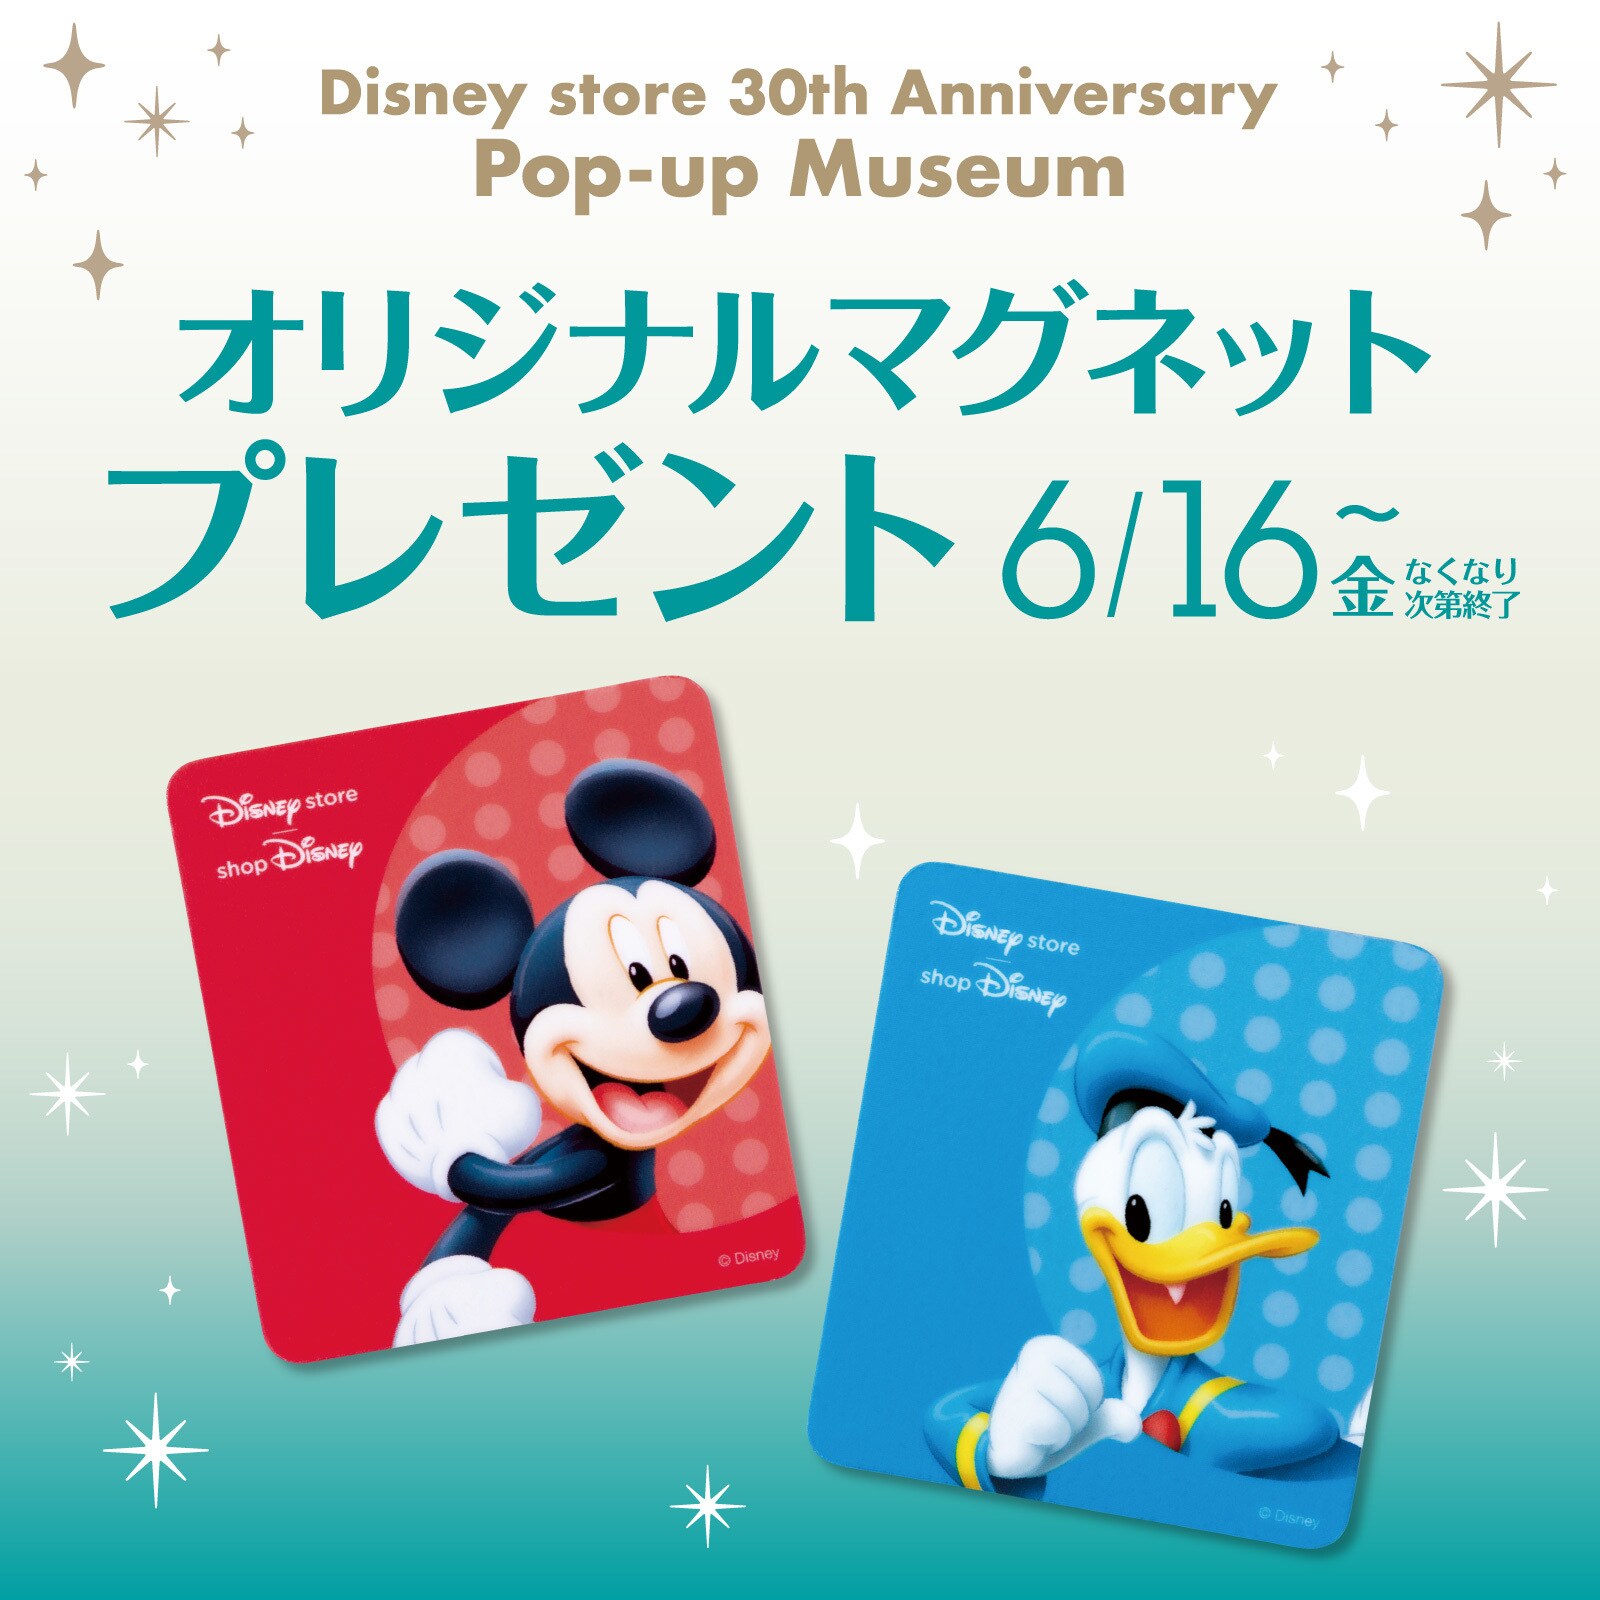 Disney store 30th Anniversary Pop-up Museum 名古屋会場 